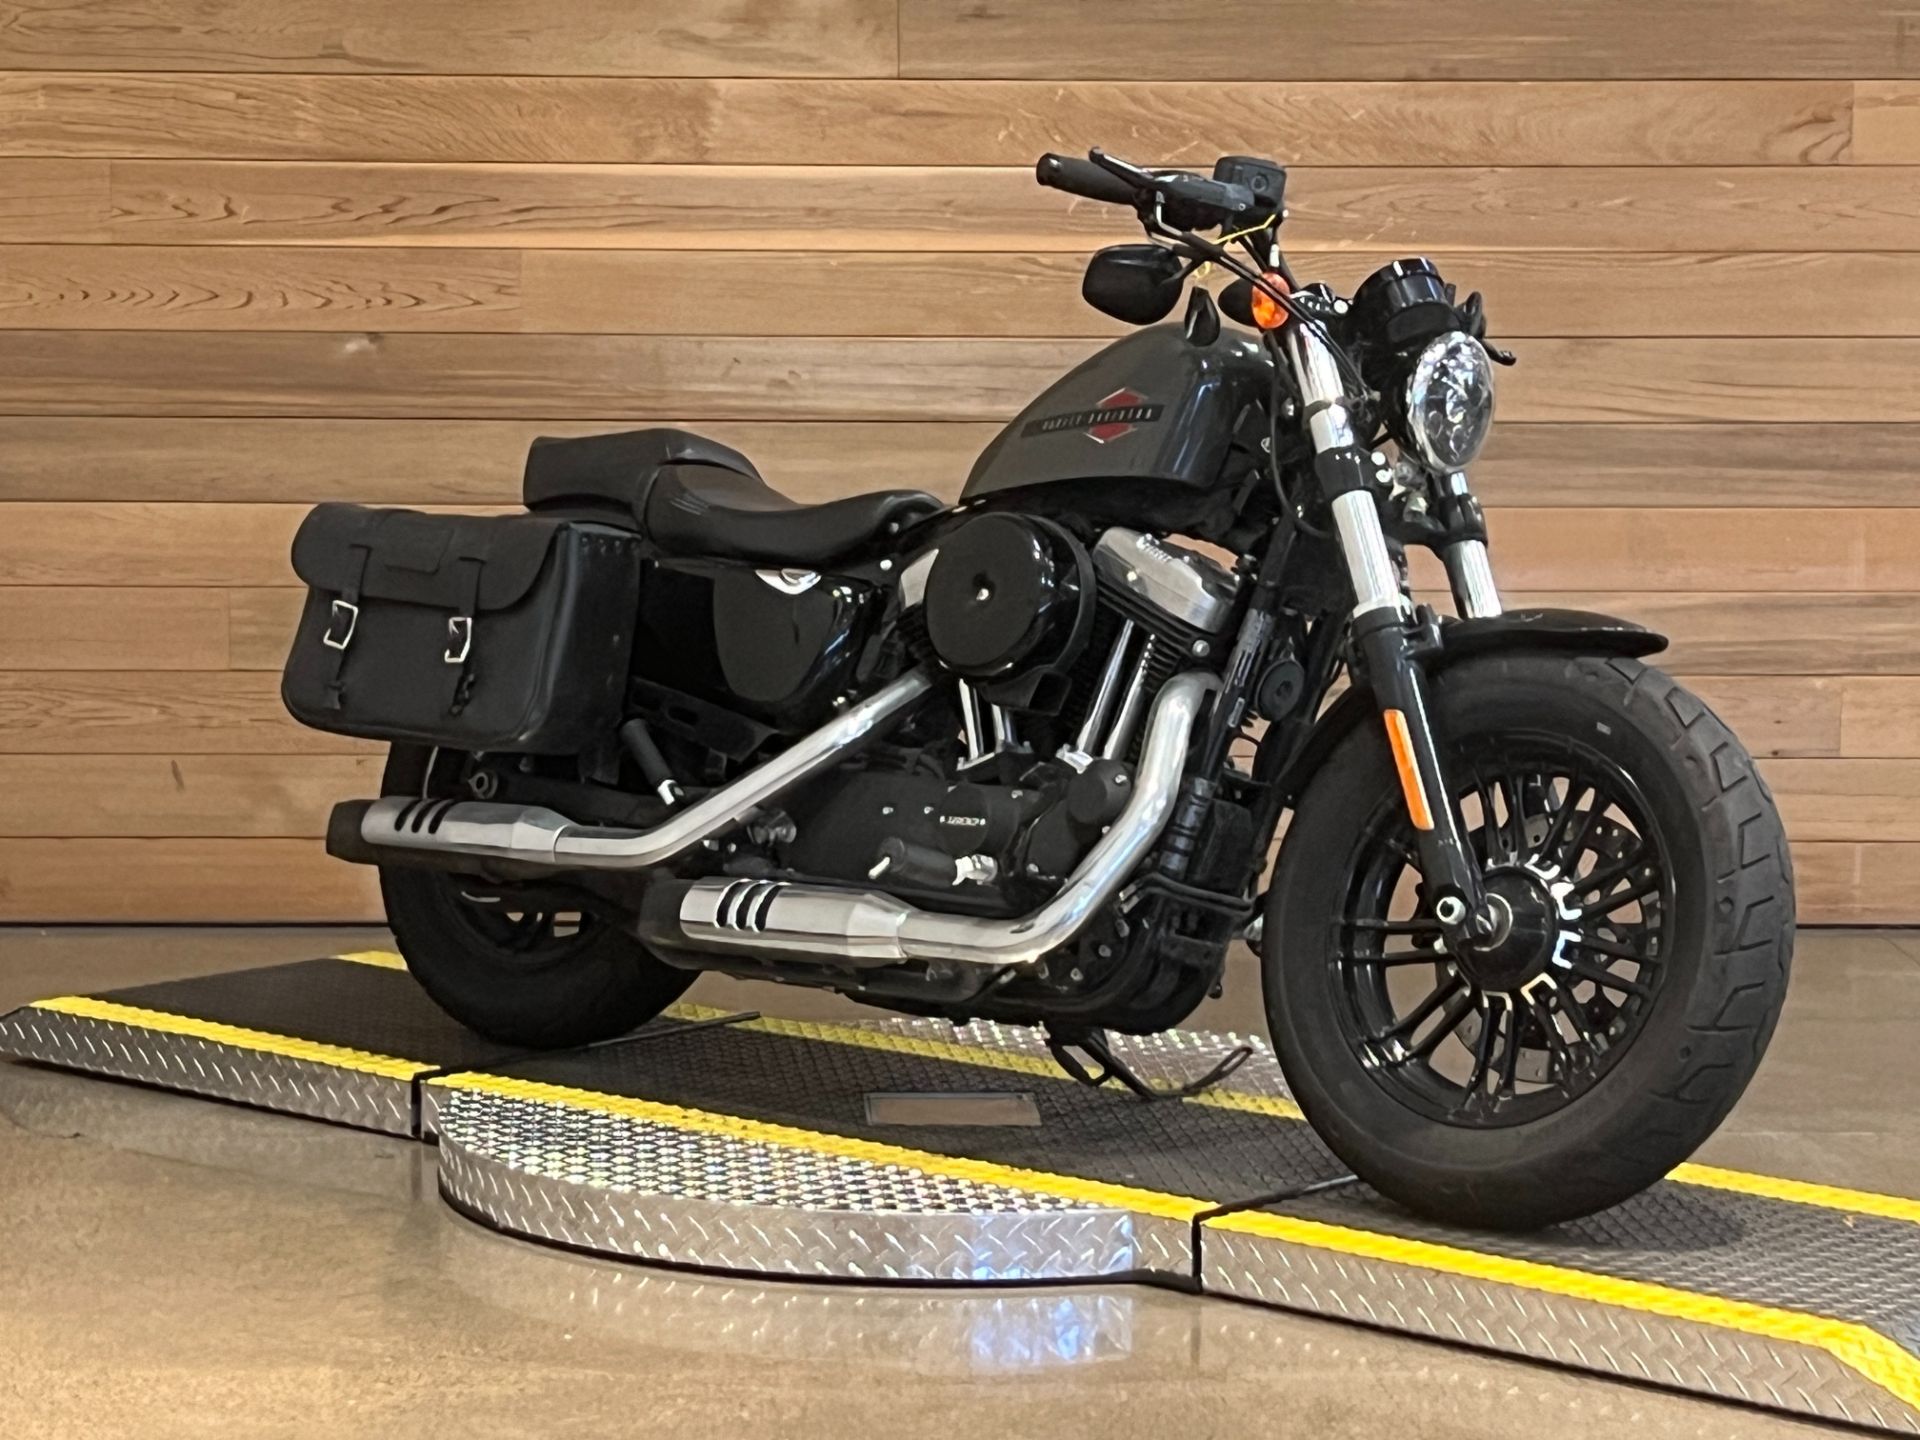 2019 Harley-Davidson Forty-Eight® in Salem, Oregon - Photo 2